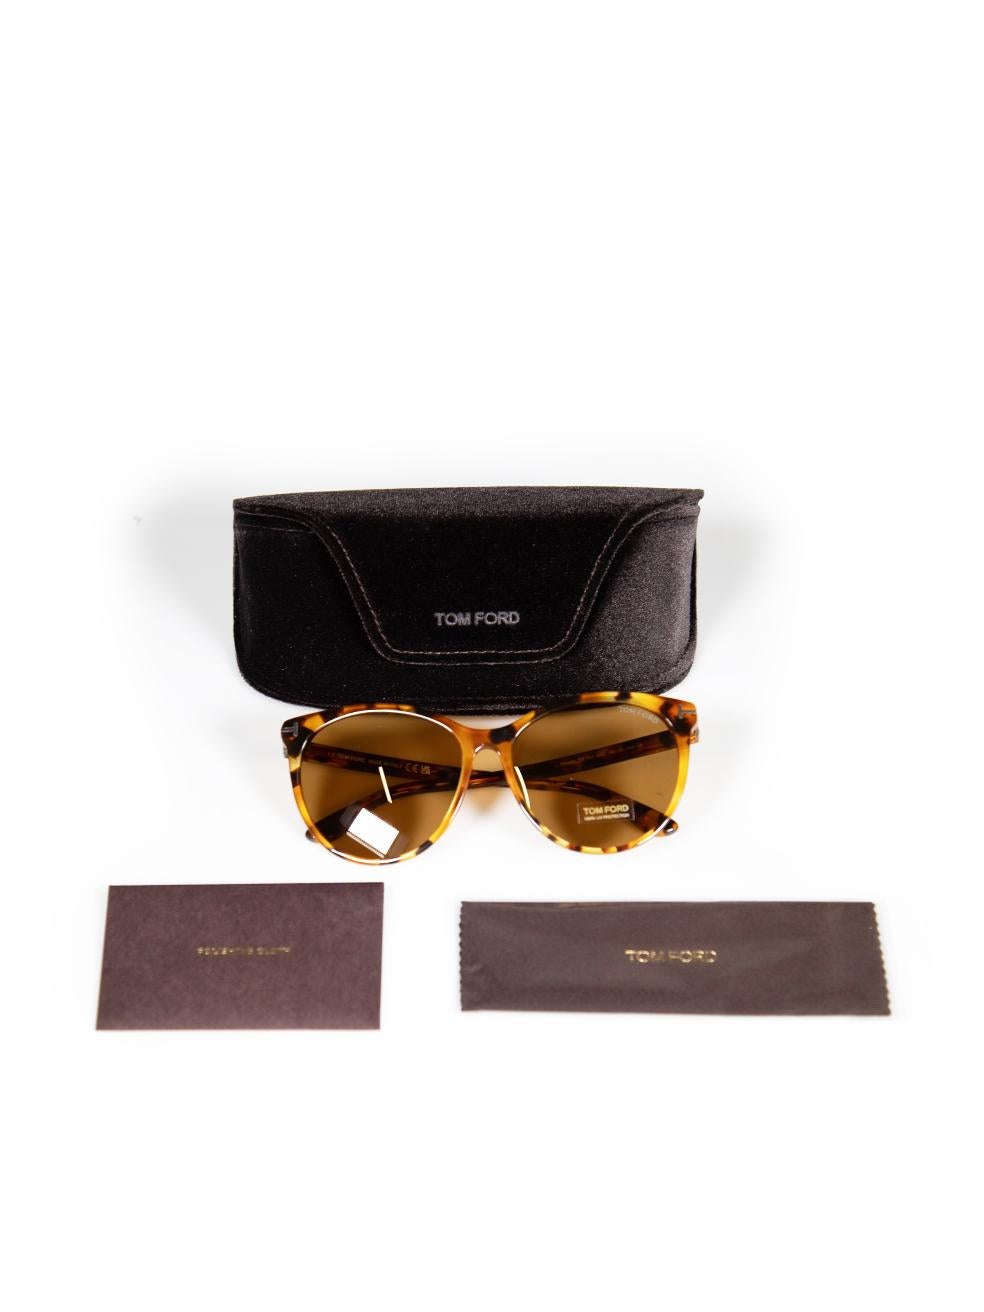 Tom Ford Coloured Havana Maxim Sunglasses For Sale 4